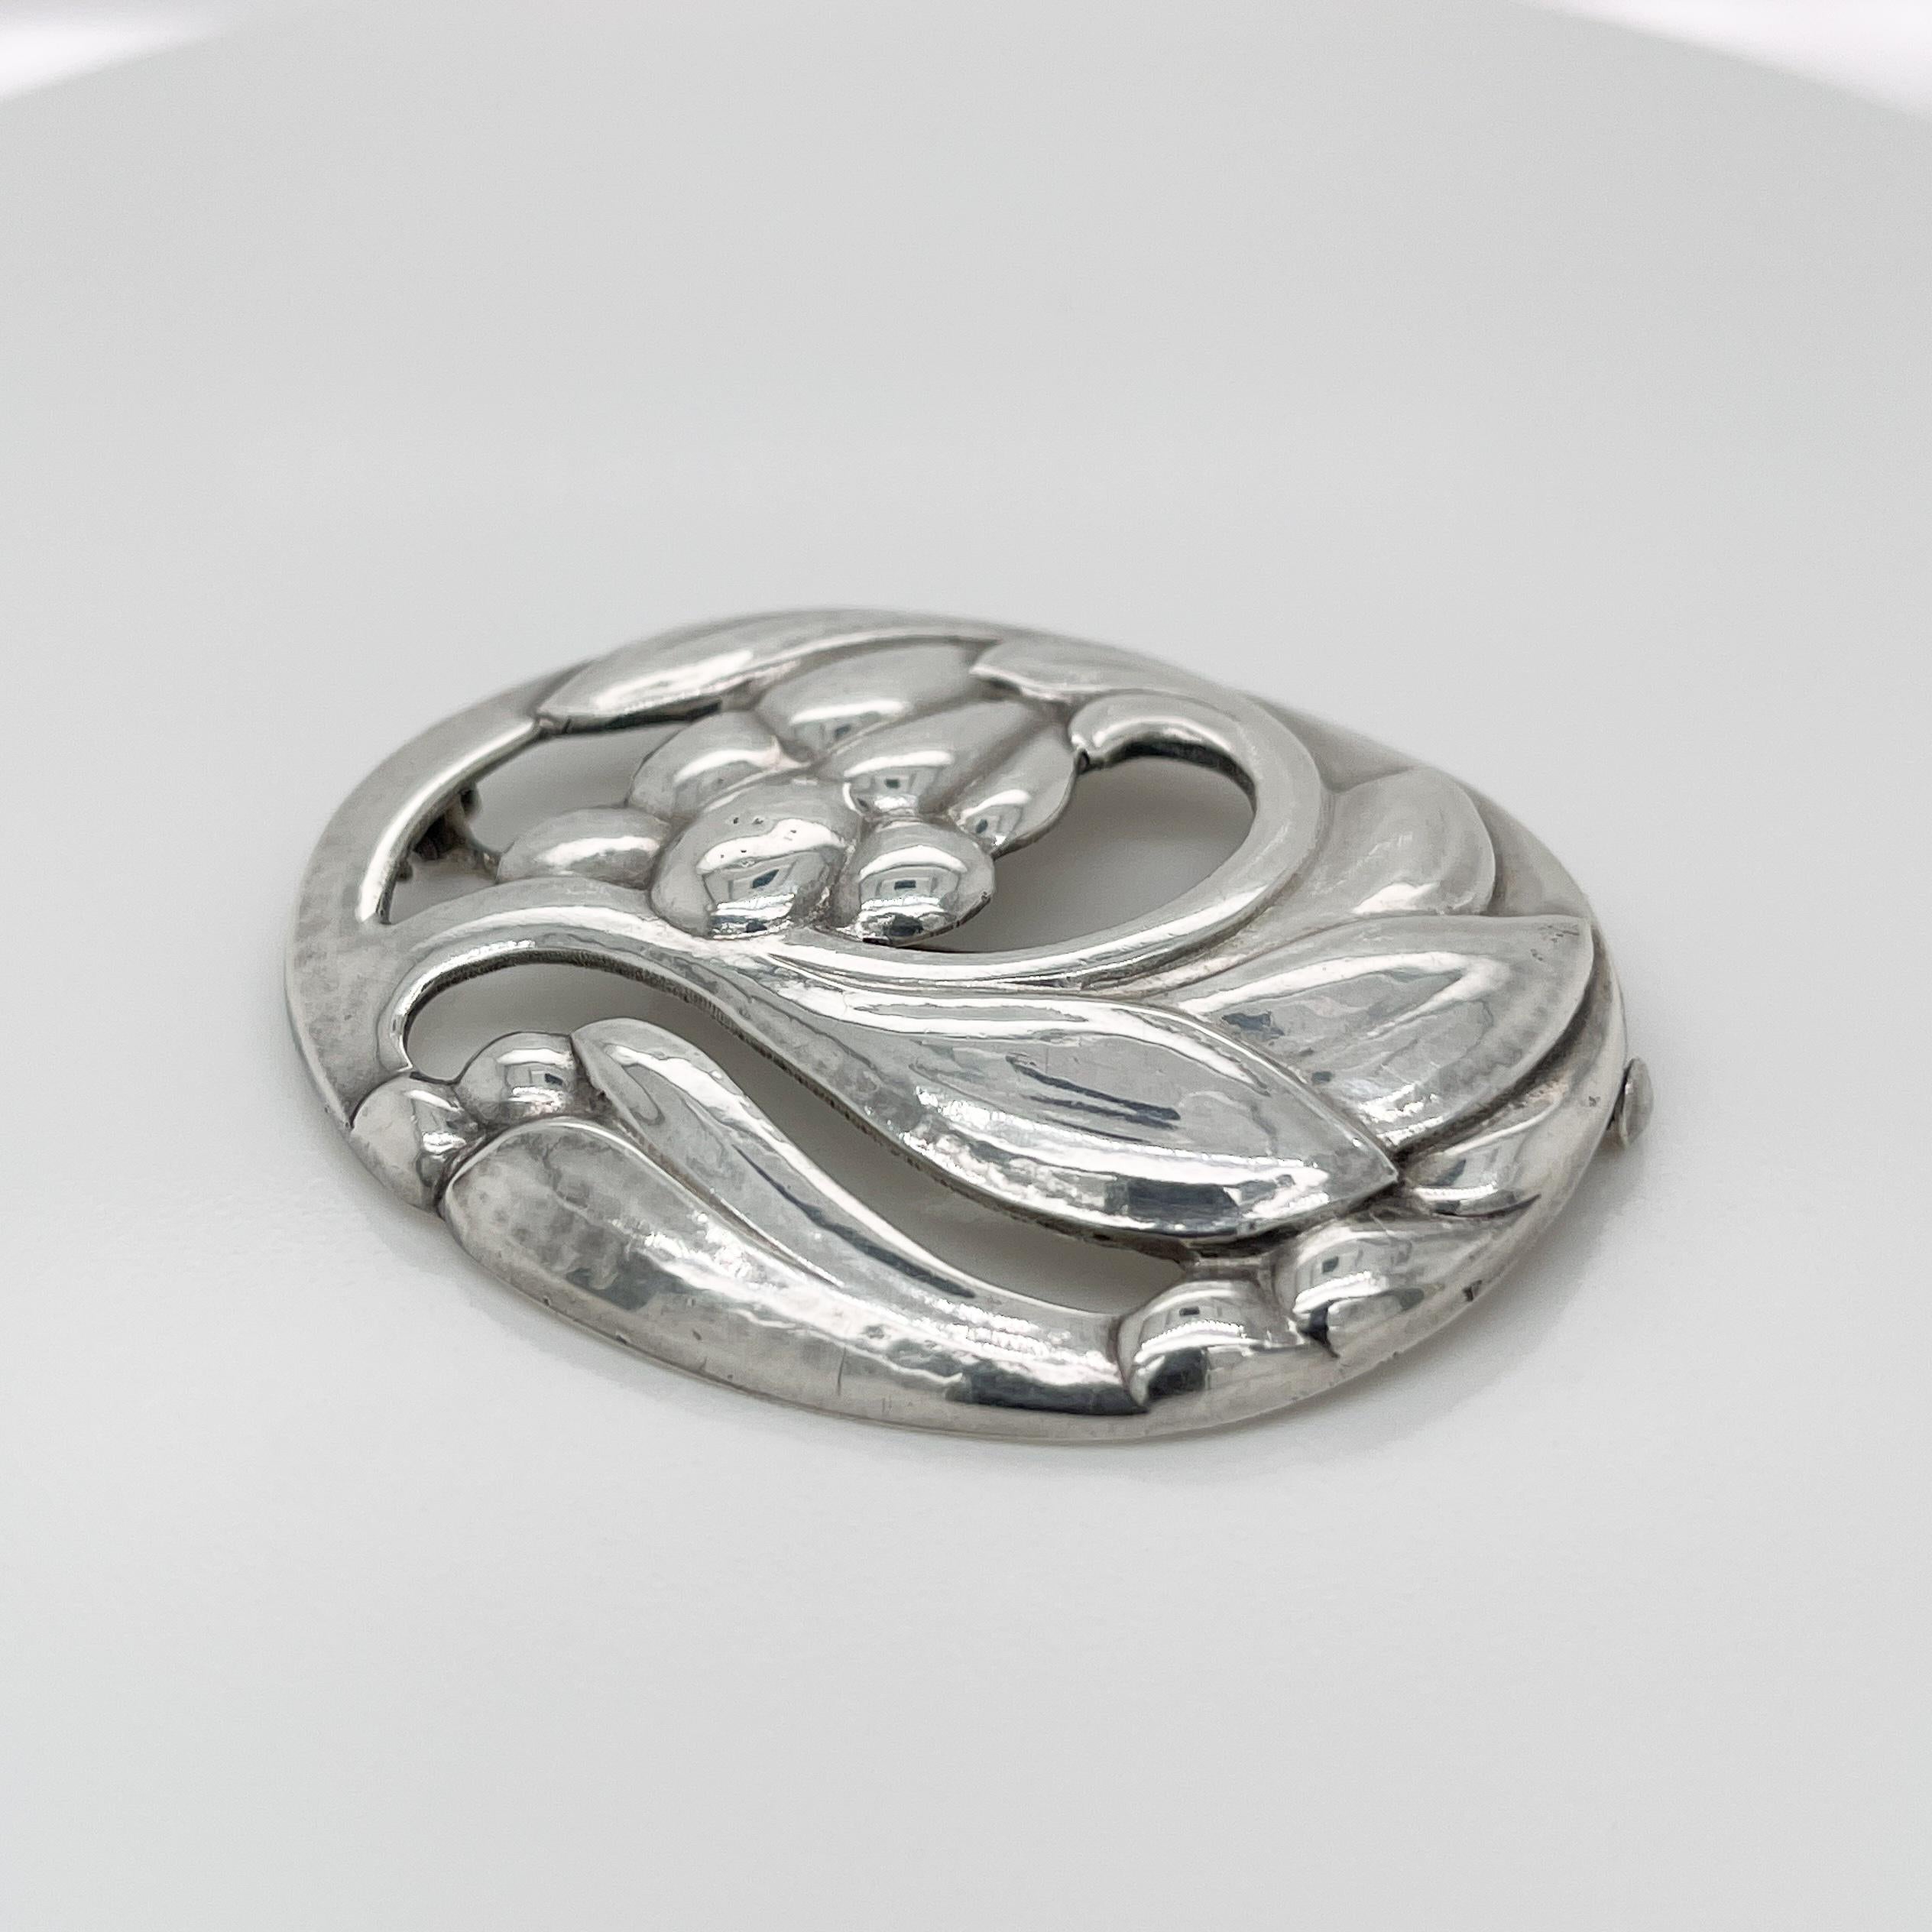 Georg Jensen Art Nouveau Sterling Silver Brooch No. 65 For Sale 1